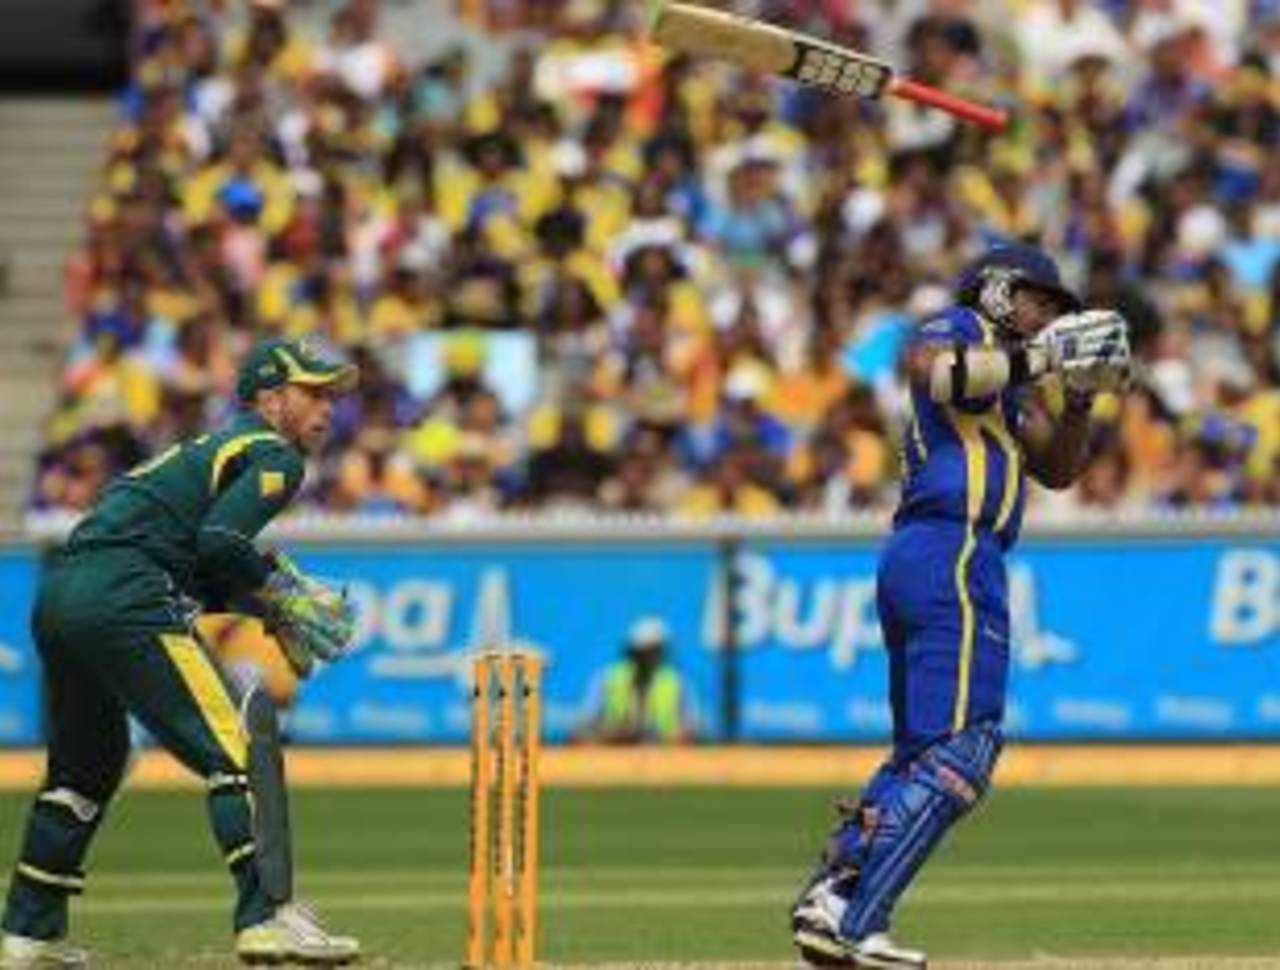 Kumar Sangakkara loses his bat as he tries to whip one square, Australia v Sri Lanka, CB series, Melbourne, March 2, 2012